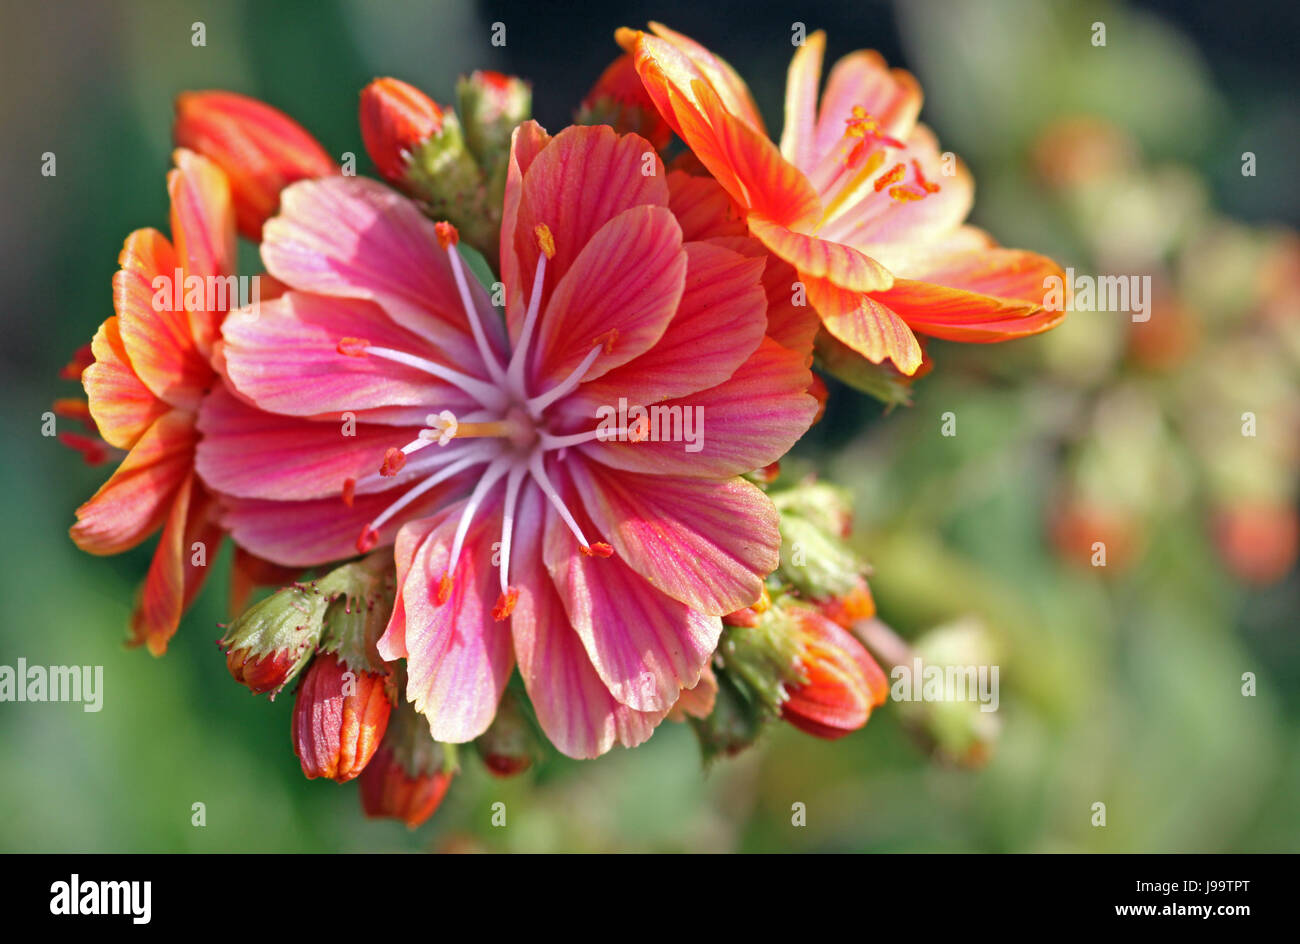 bloom, blossom, flourish, flourishing, red violet, orange, macro, close-up, Stock Photo